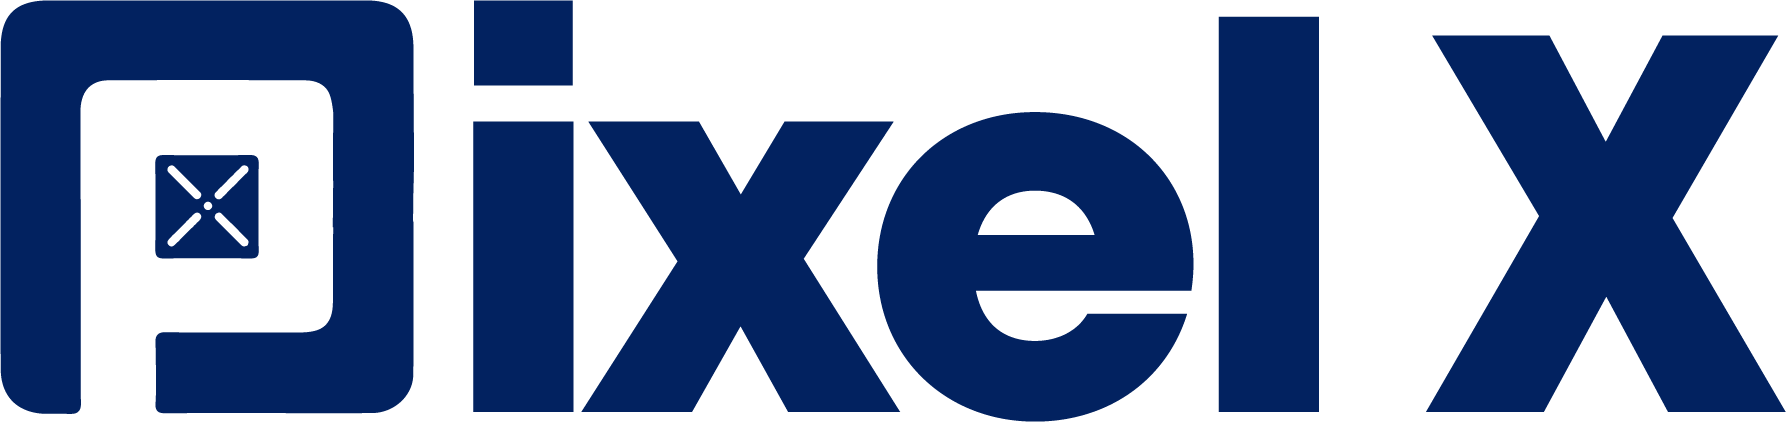 Pixel X App - Logo